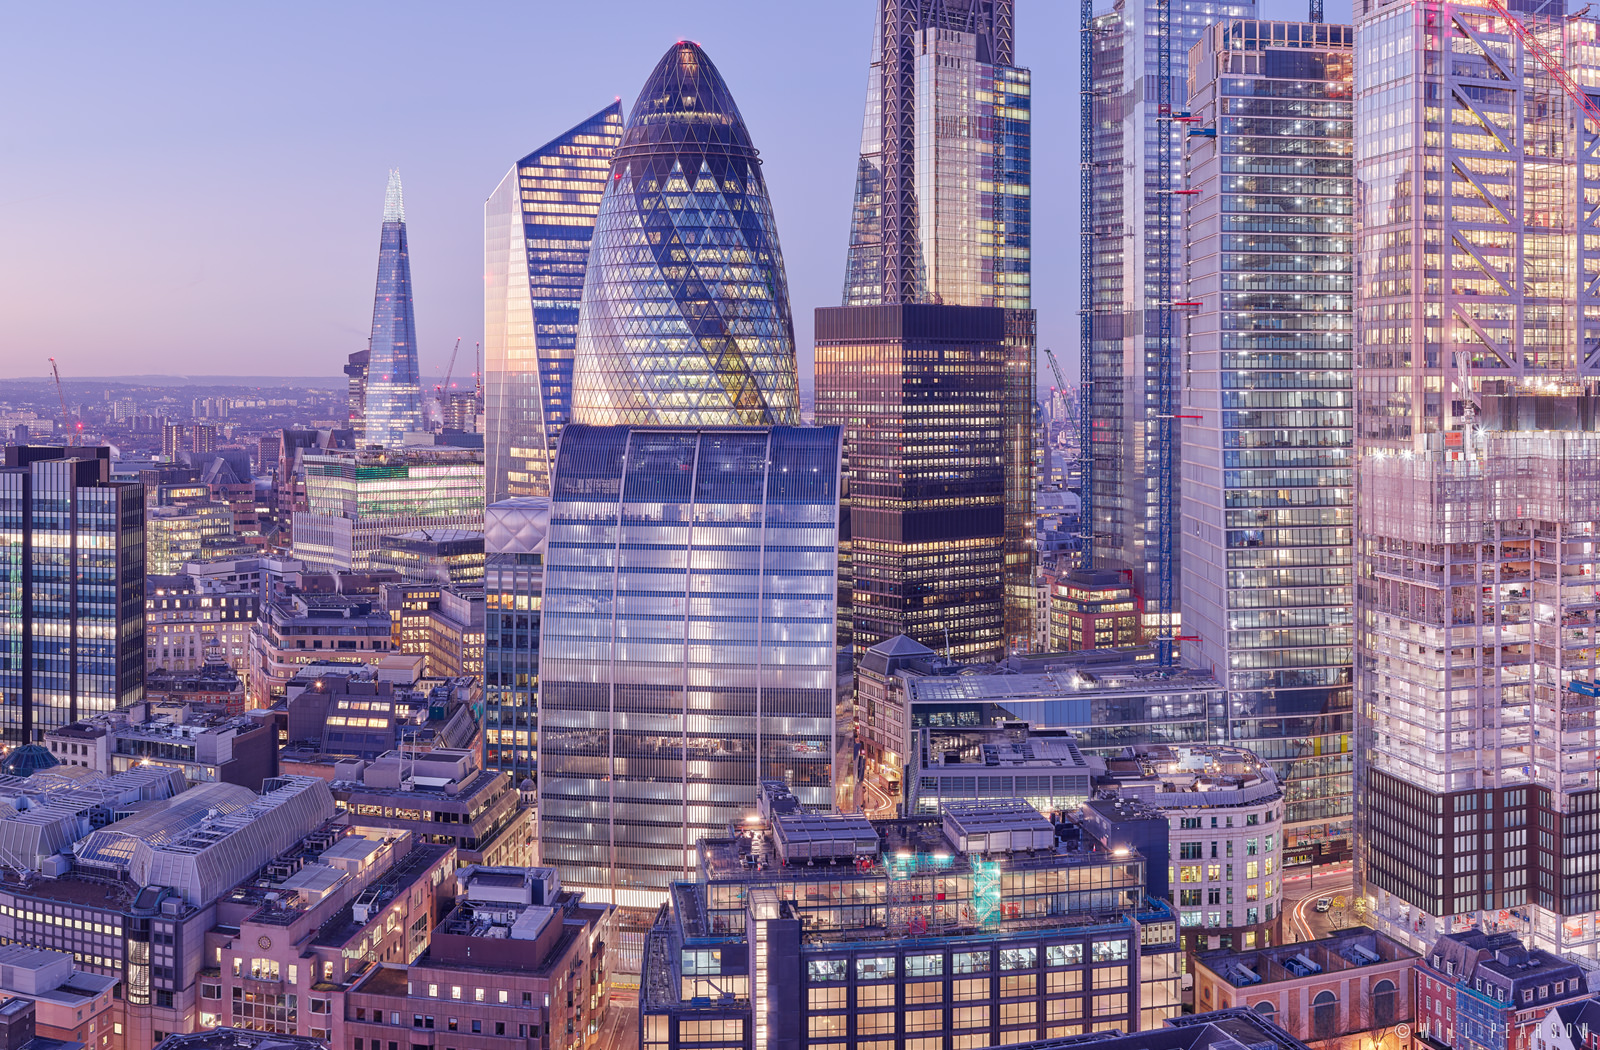 London Wide: Cityscape photographer creates enhanced gigapixel